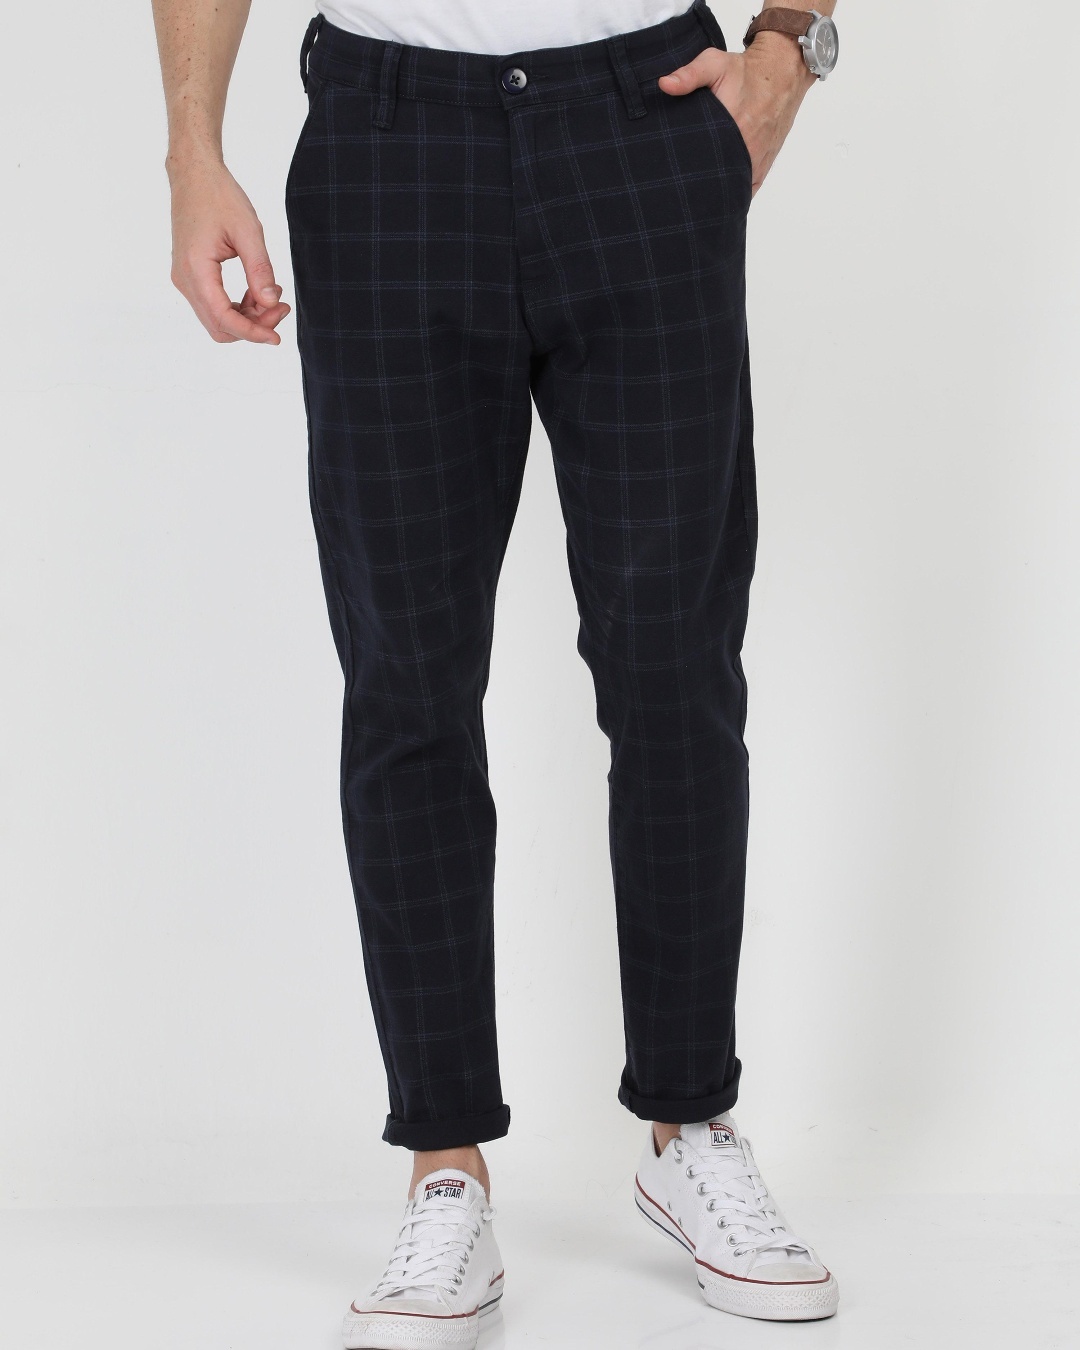 Buy Men's Black Checked Slim Fit Trousers Online at Bewakoof